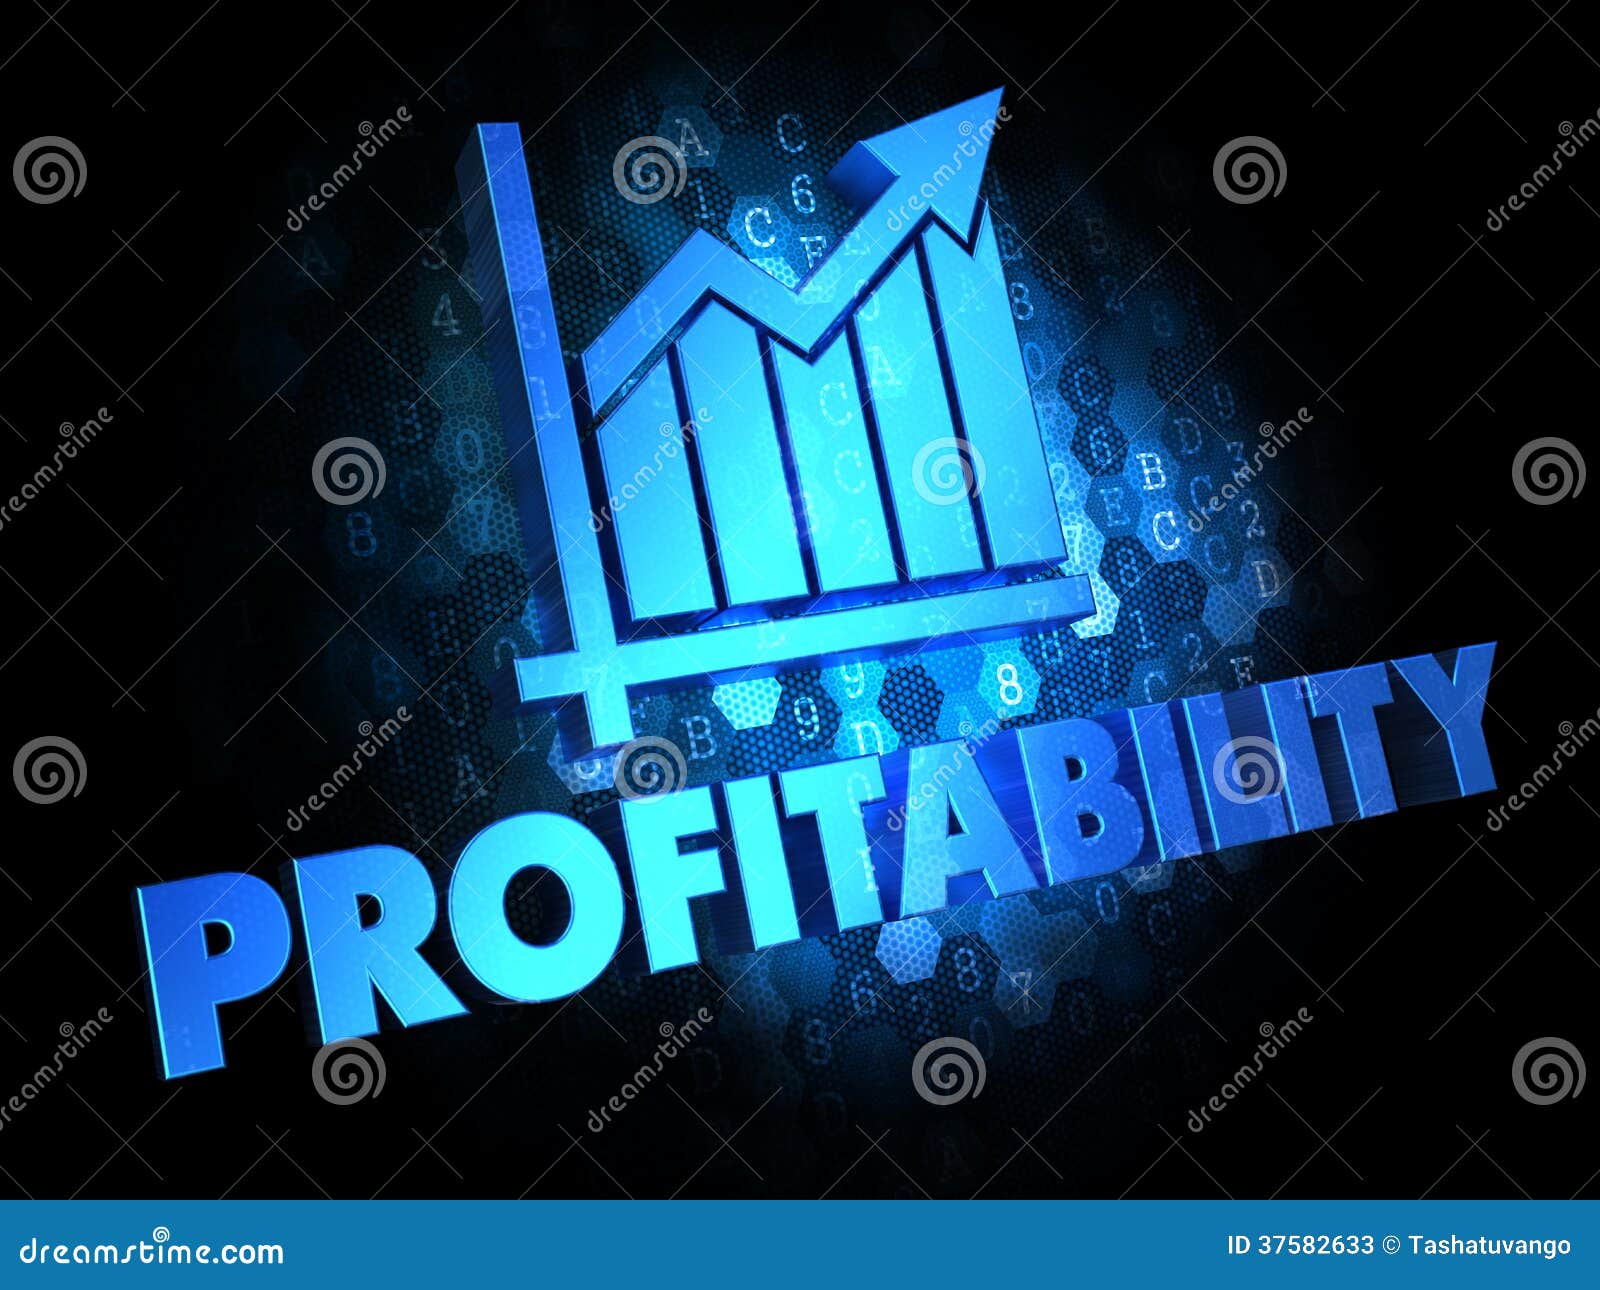 profitability concept on dark digital background.